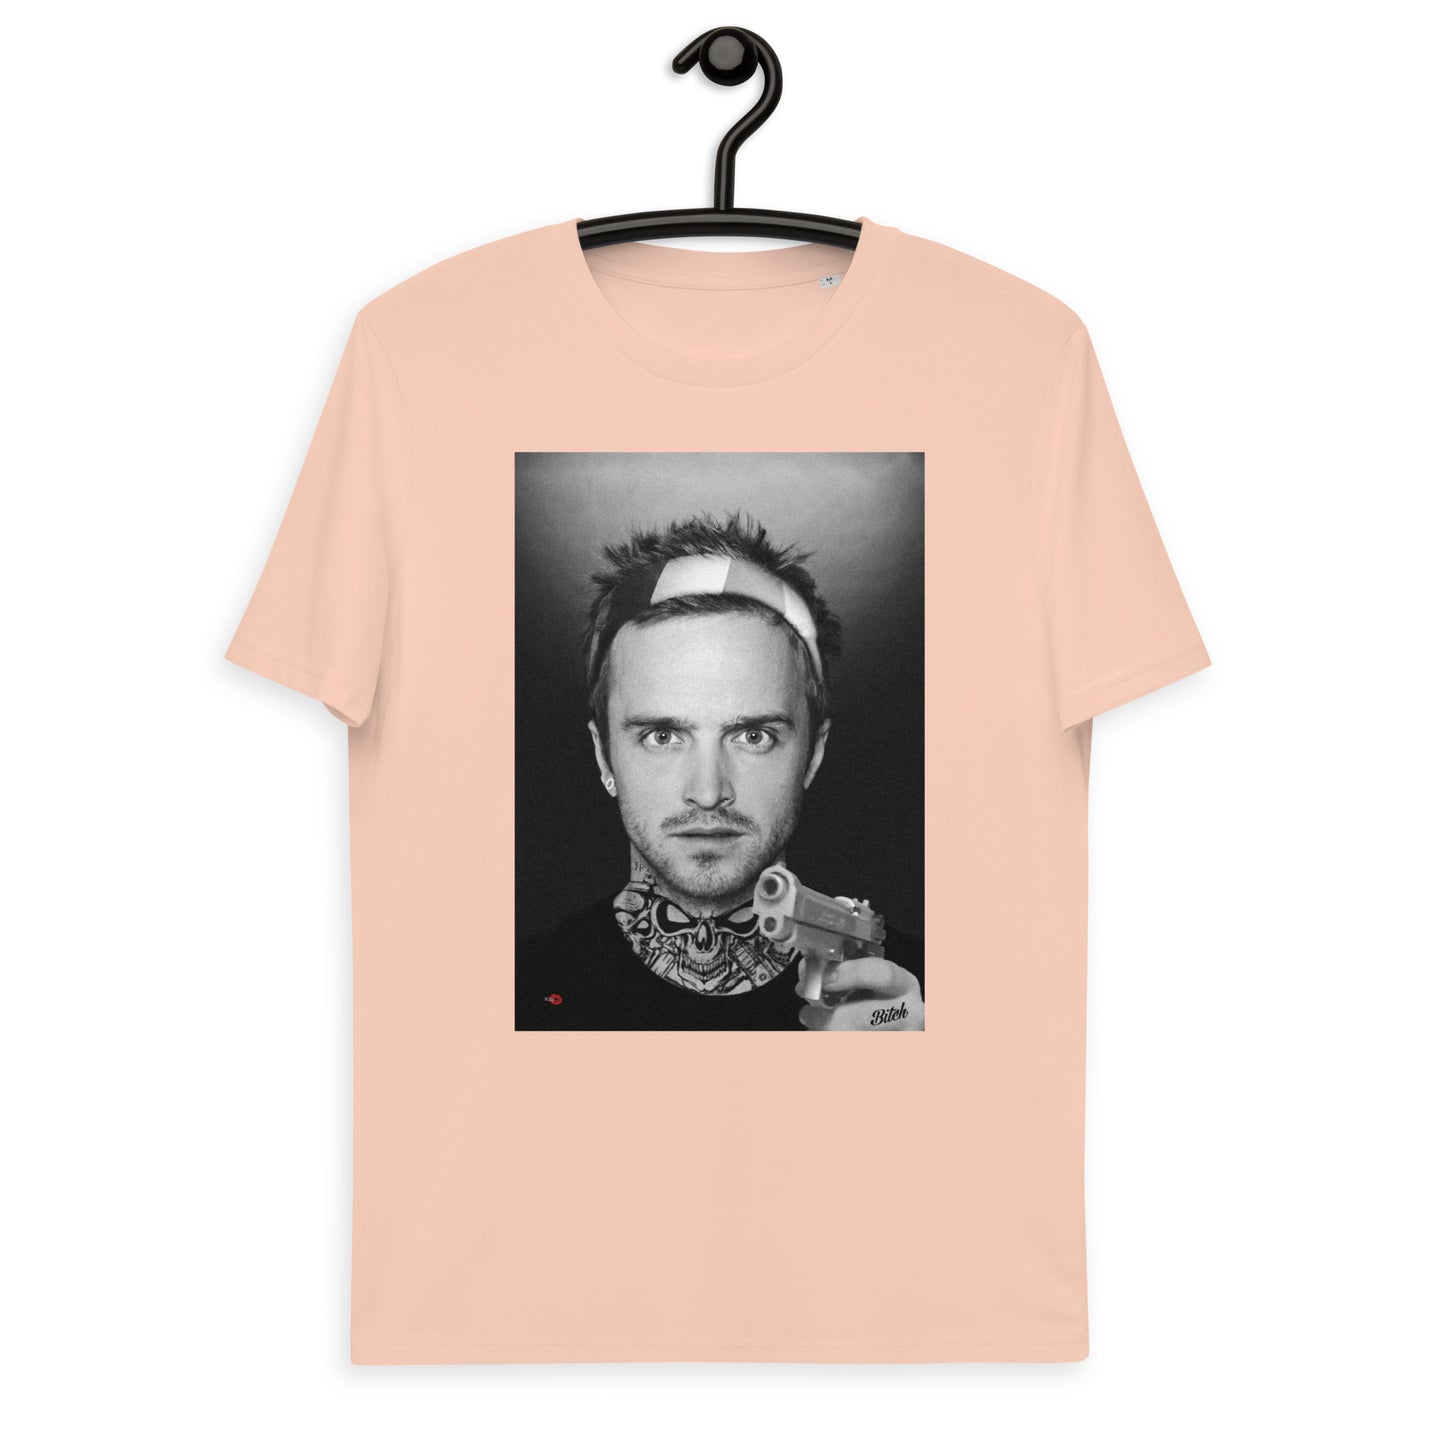 Pinkman KiSS Unisex organic cotton t-shirt - Jesse Breaking Bad show inspired Tattooed